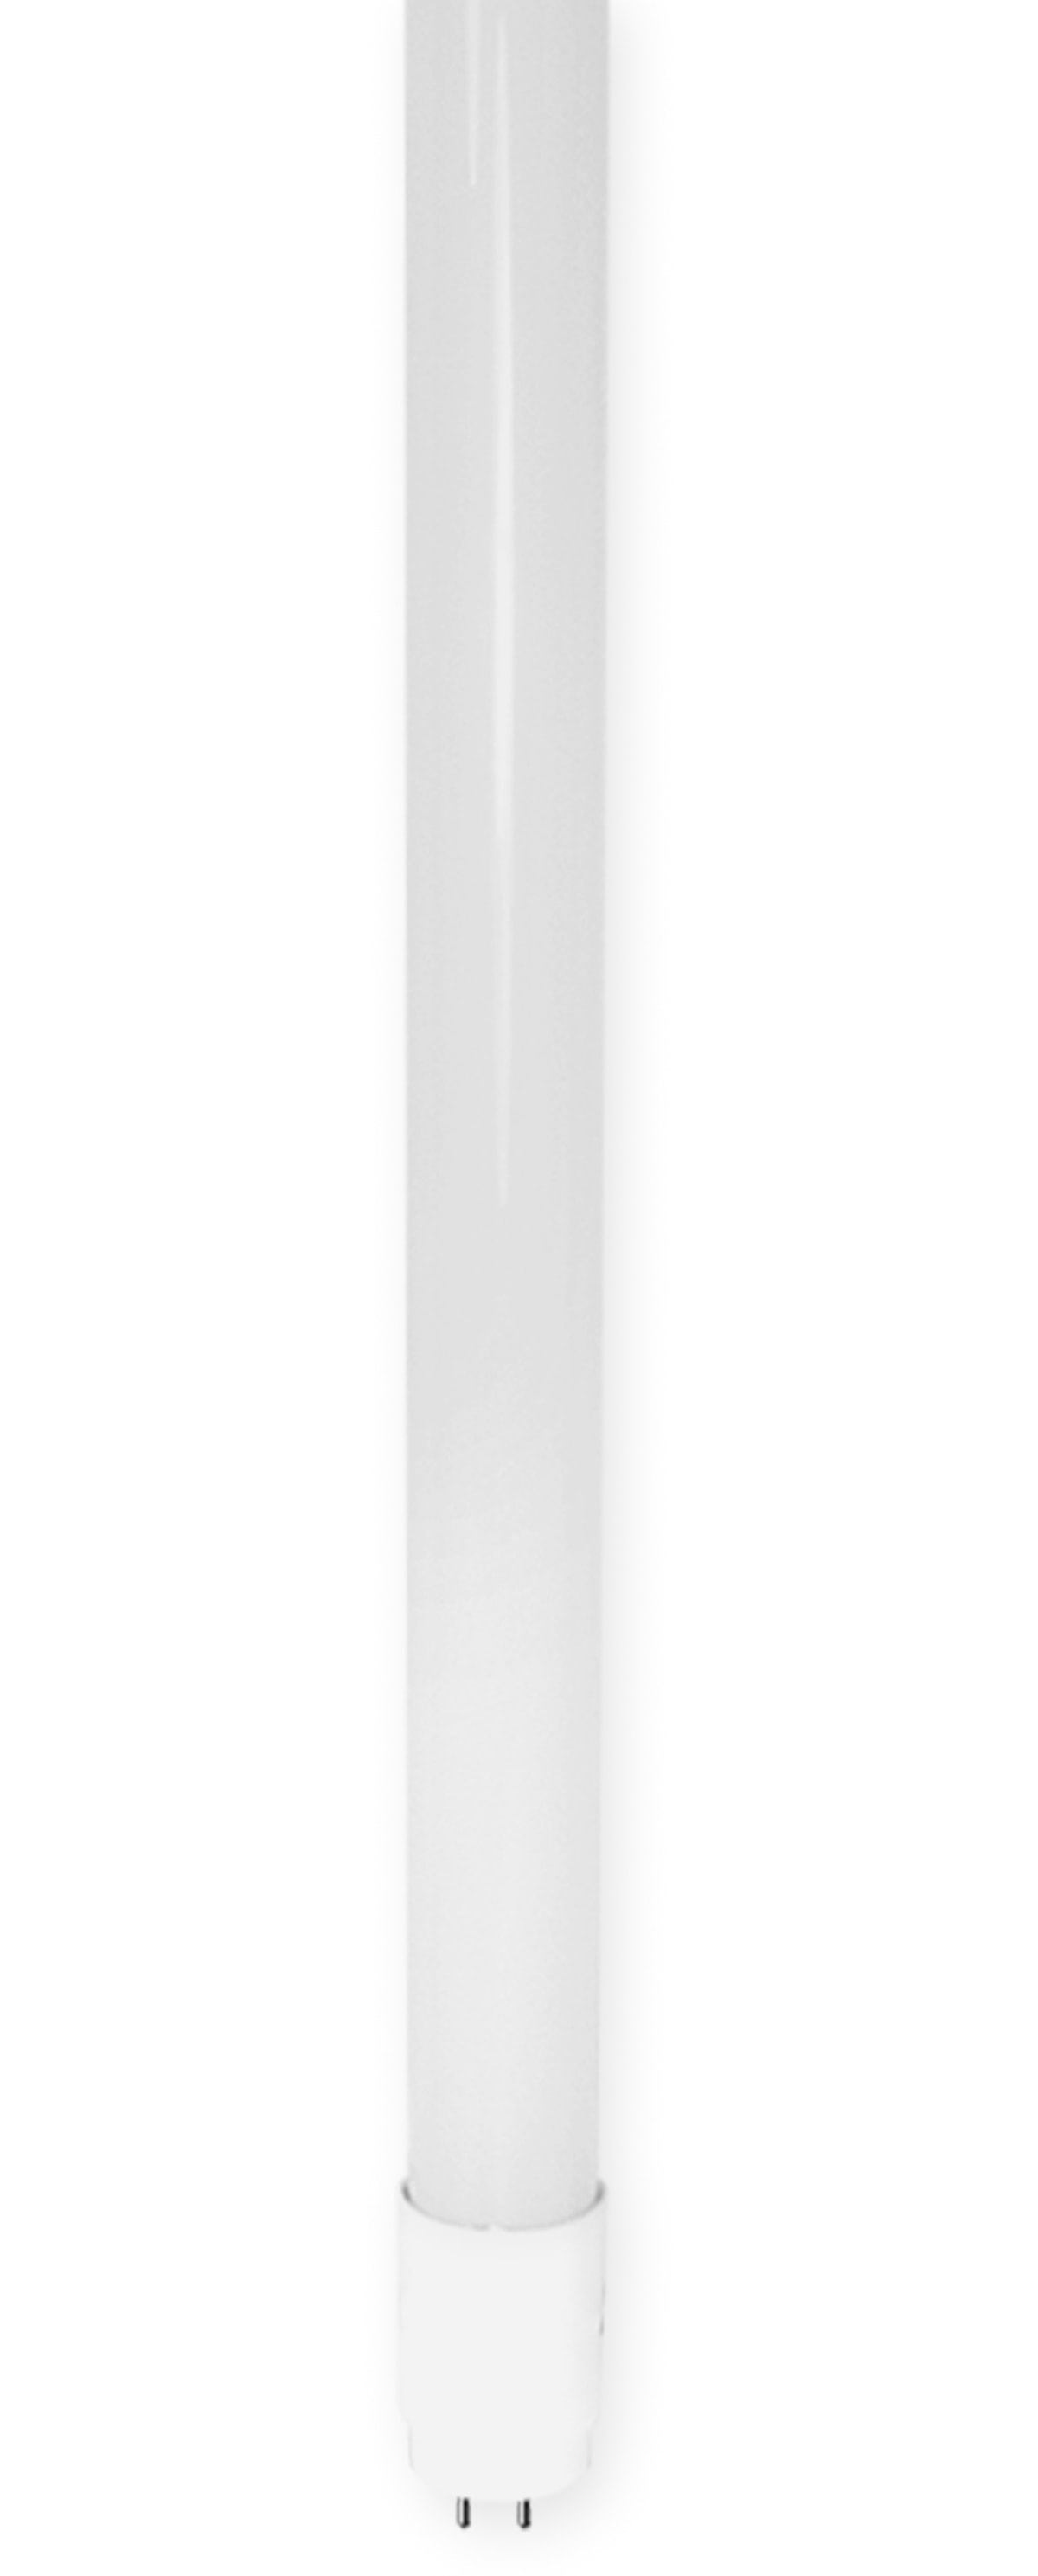 BLULAXA LED-Röhre 48199, EEK: F, 18 W, 1900 lm, G13, 6500 K, 120 cm